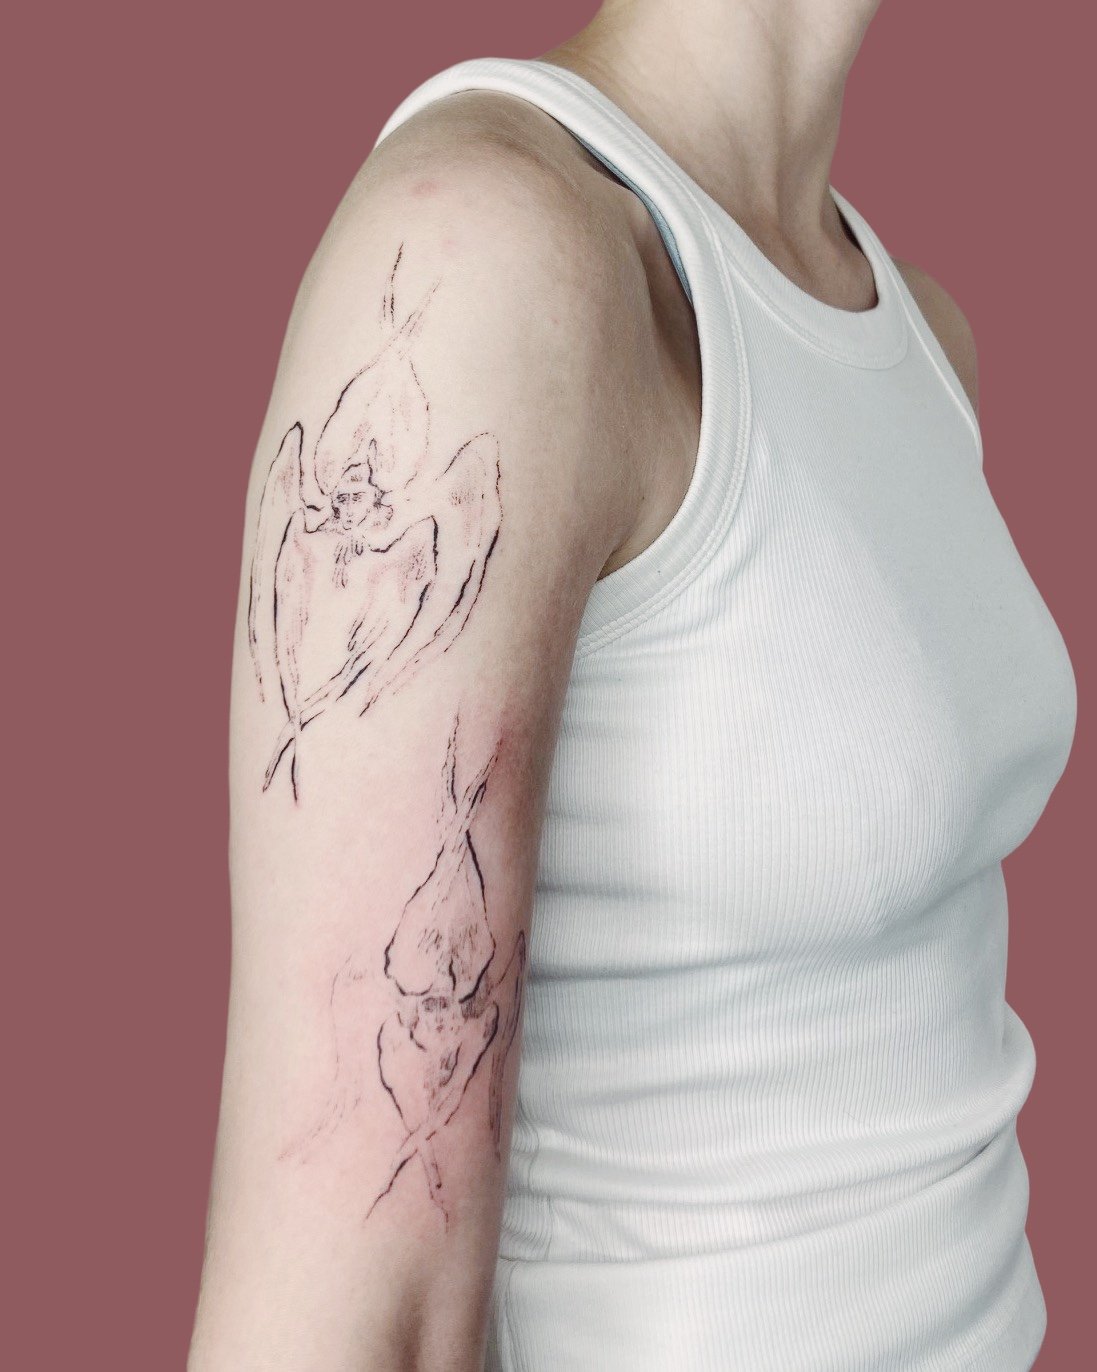 Arm tattoos hand poked by zviiirrrrr.JPG